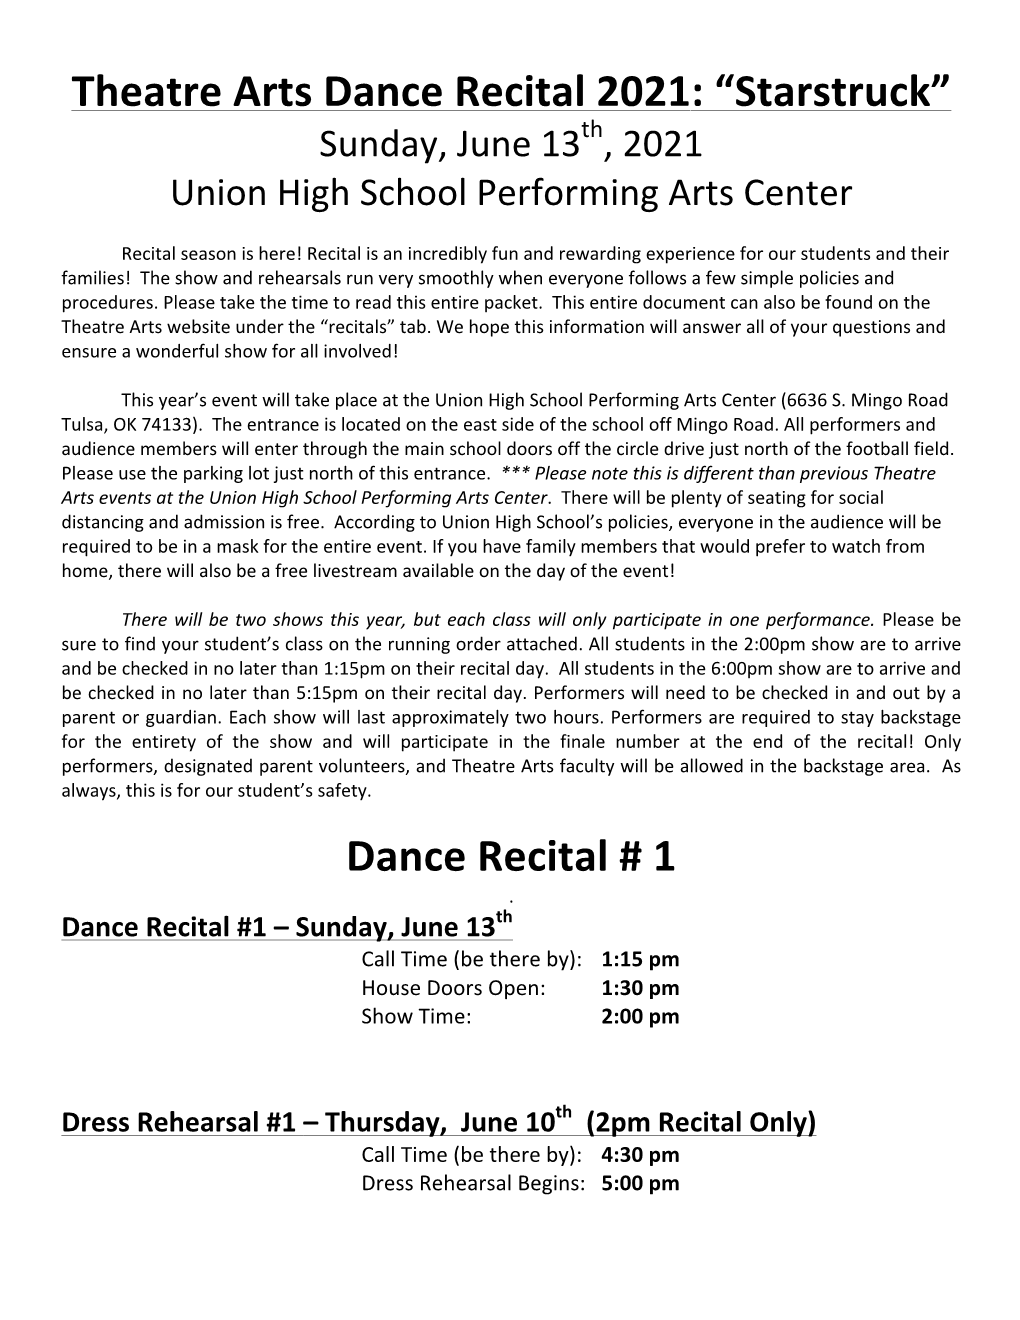 Theatre Arts Dance Recital 2021: “Starstruck” Sunday, June 13Th, 2021 Union High School Performing Arts Center